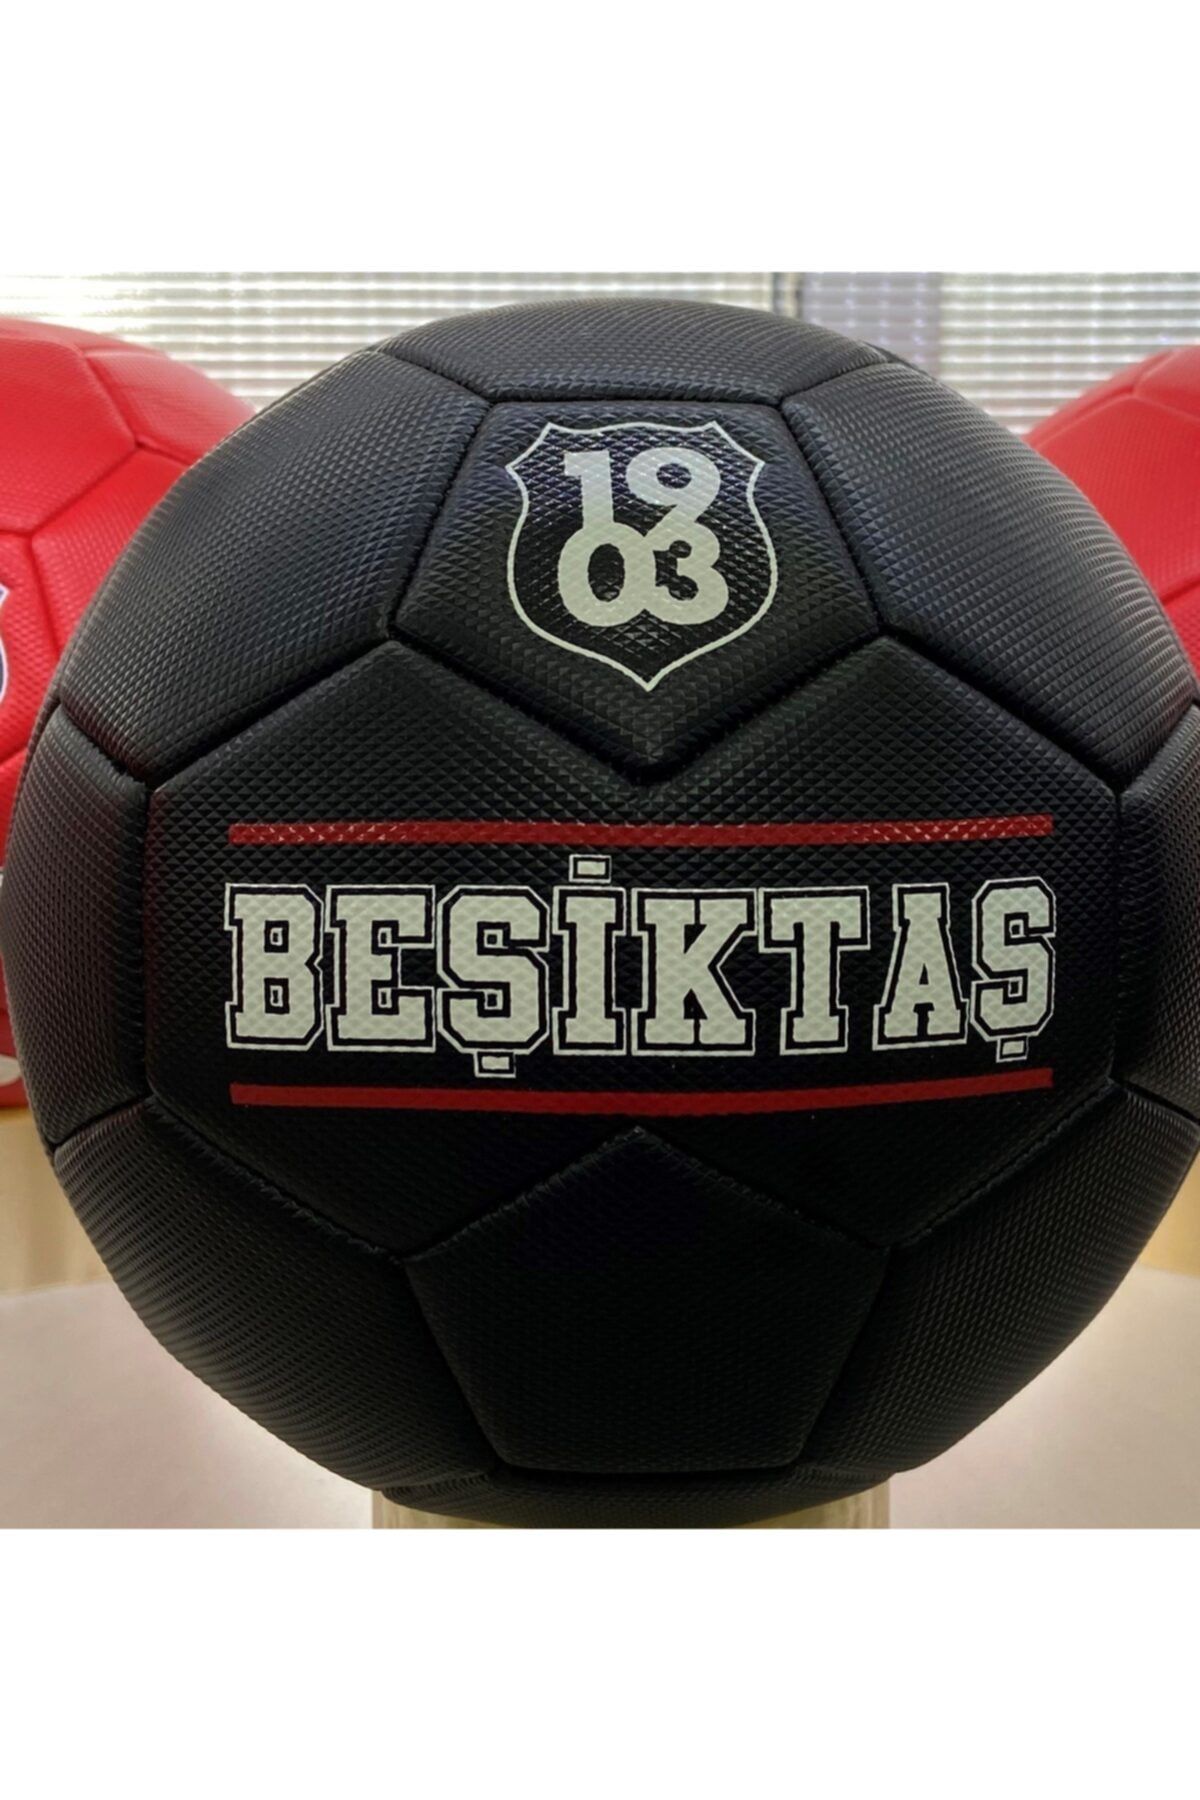 Beşiktaş Orjinal Lisanslı Futbol Topu - 2